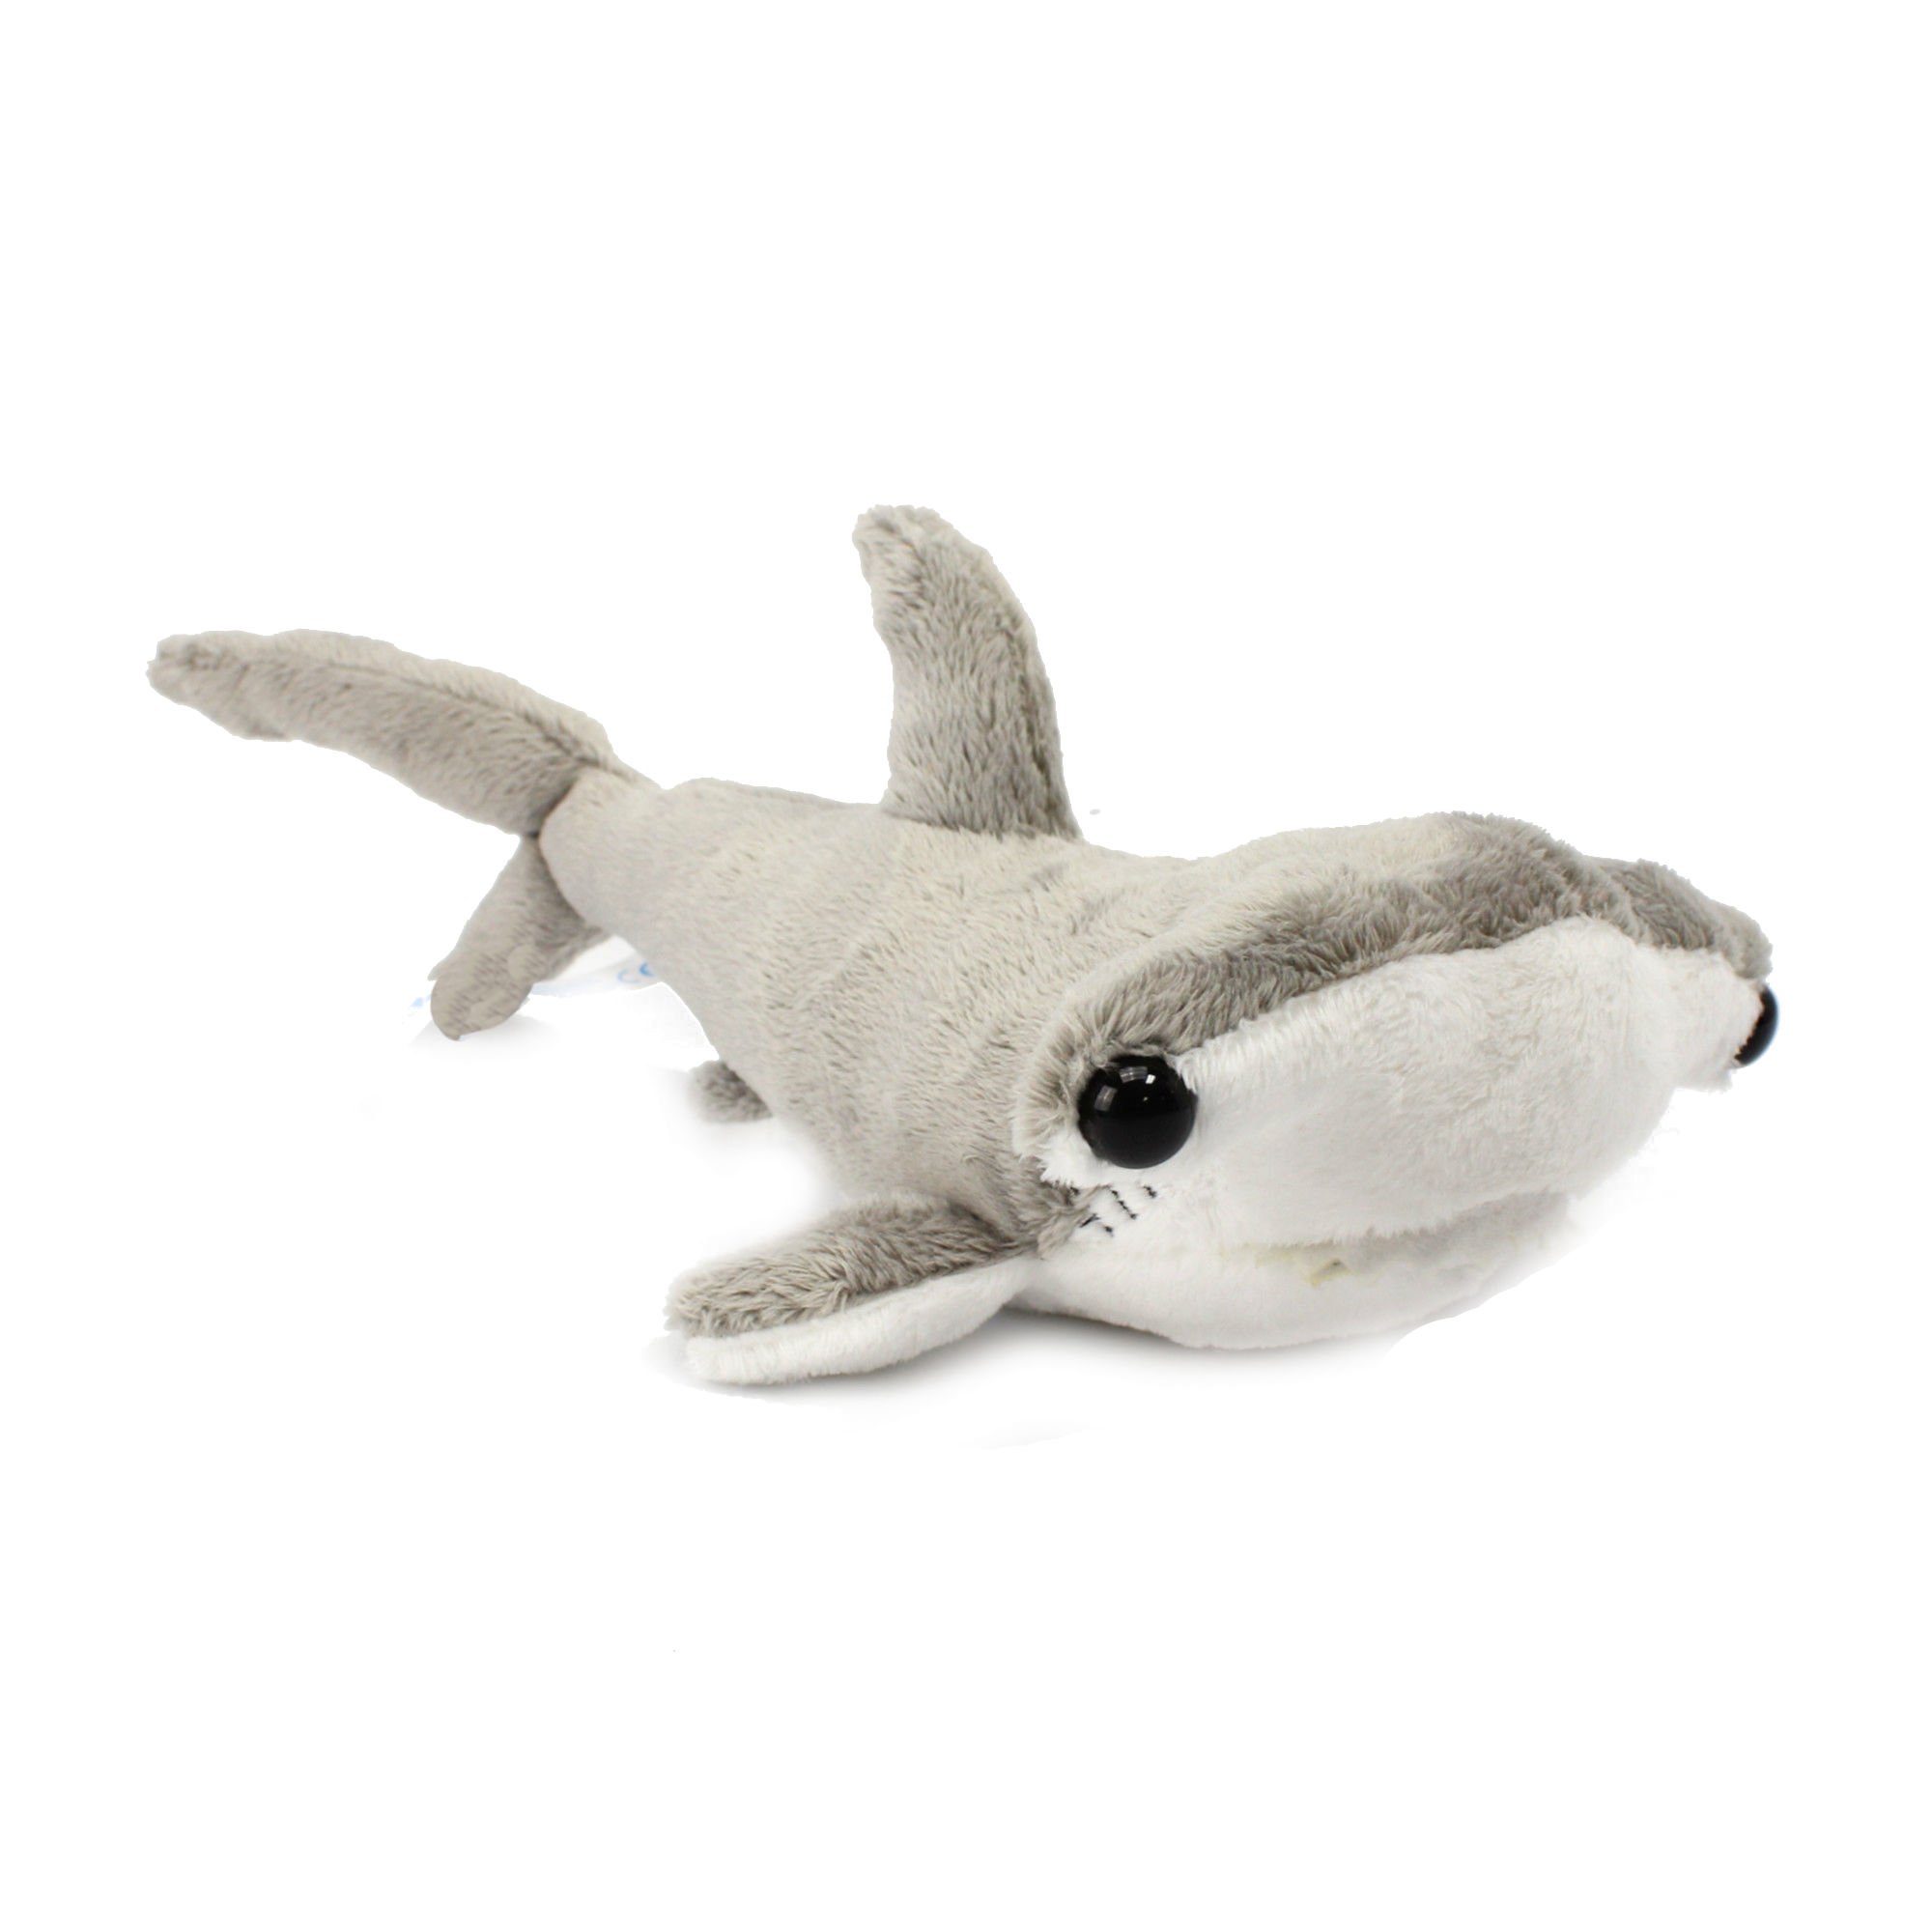 hammerhead shark stuffed animal